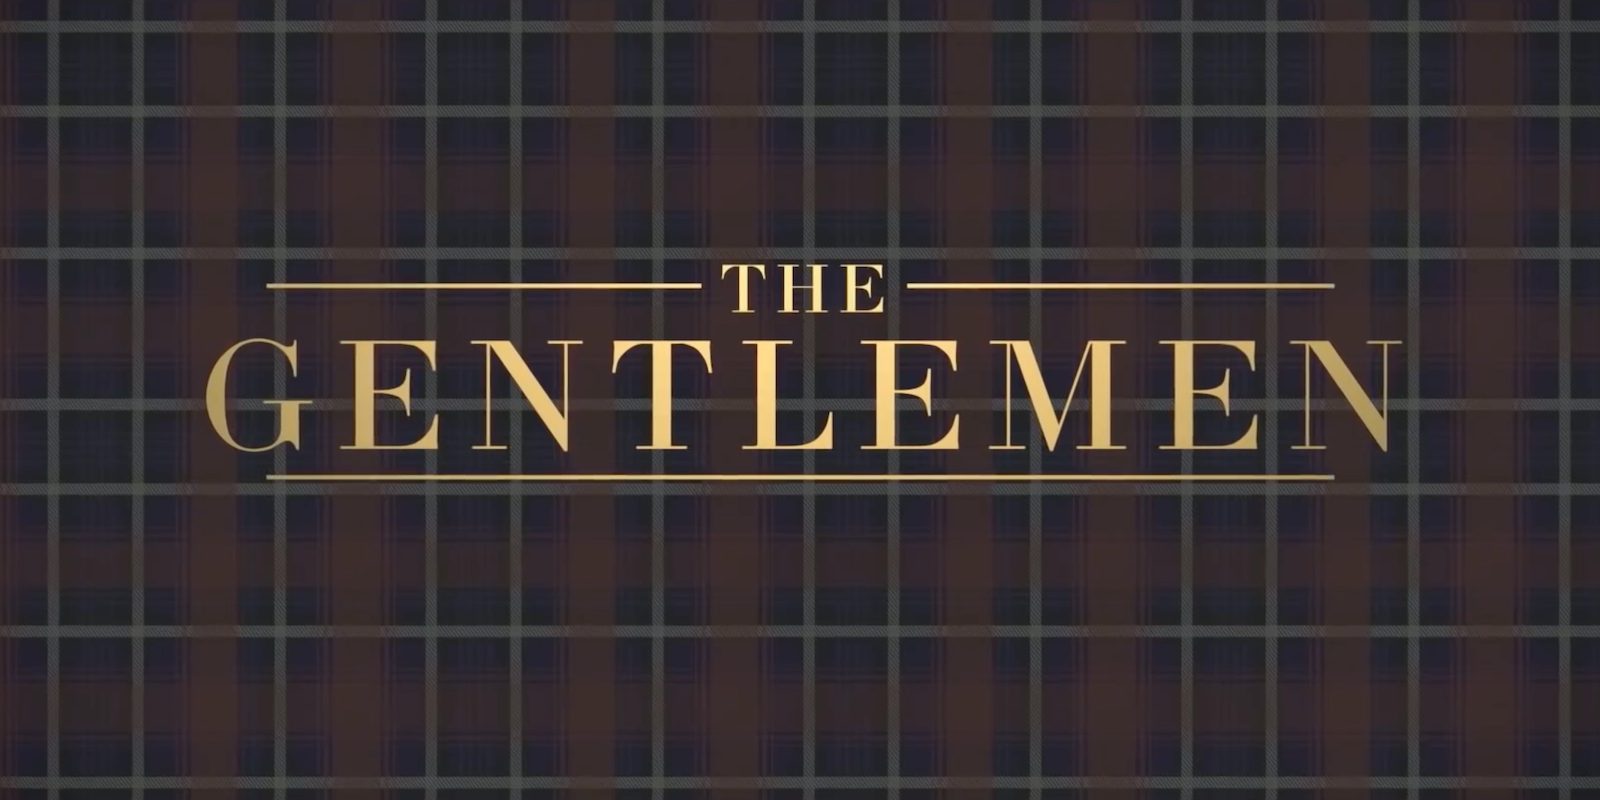 Matthew McConaughey Loves Weed in Trailer for Guy Ritchie's The Gentlemen